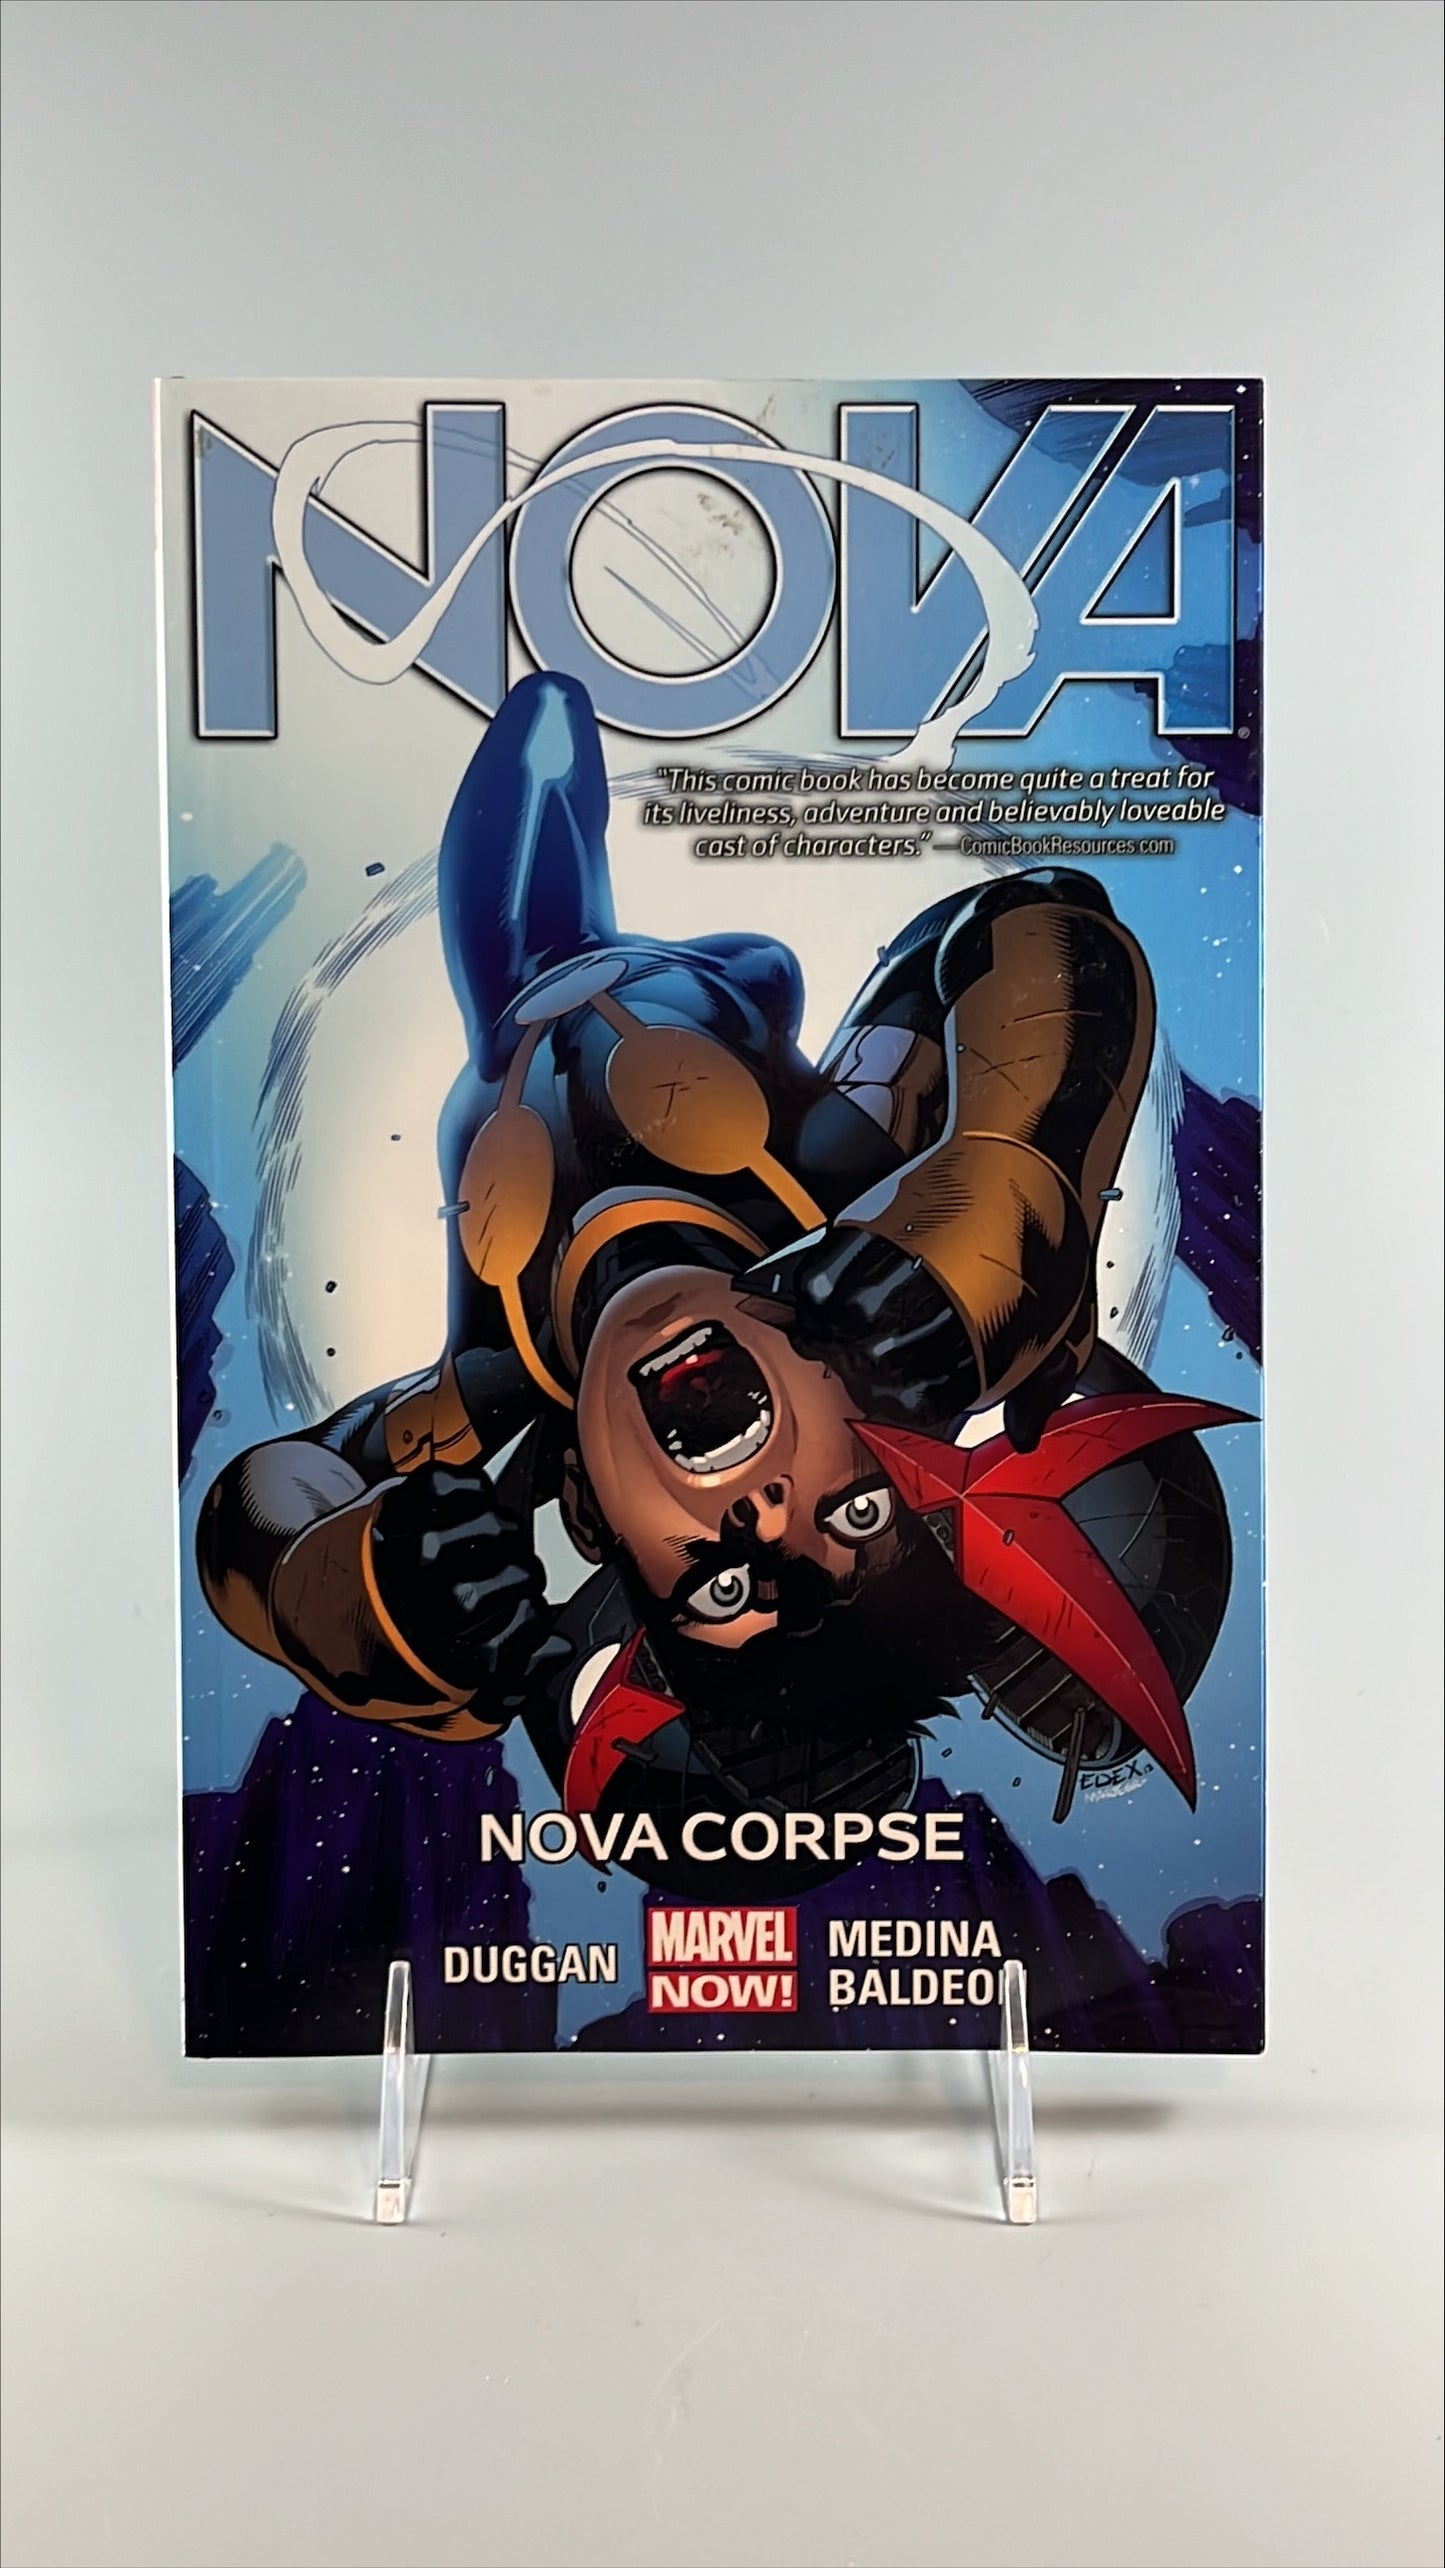 Nova: Nova Corpse